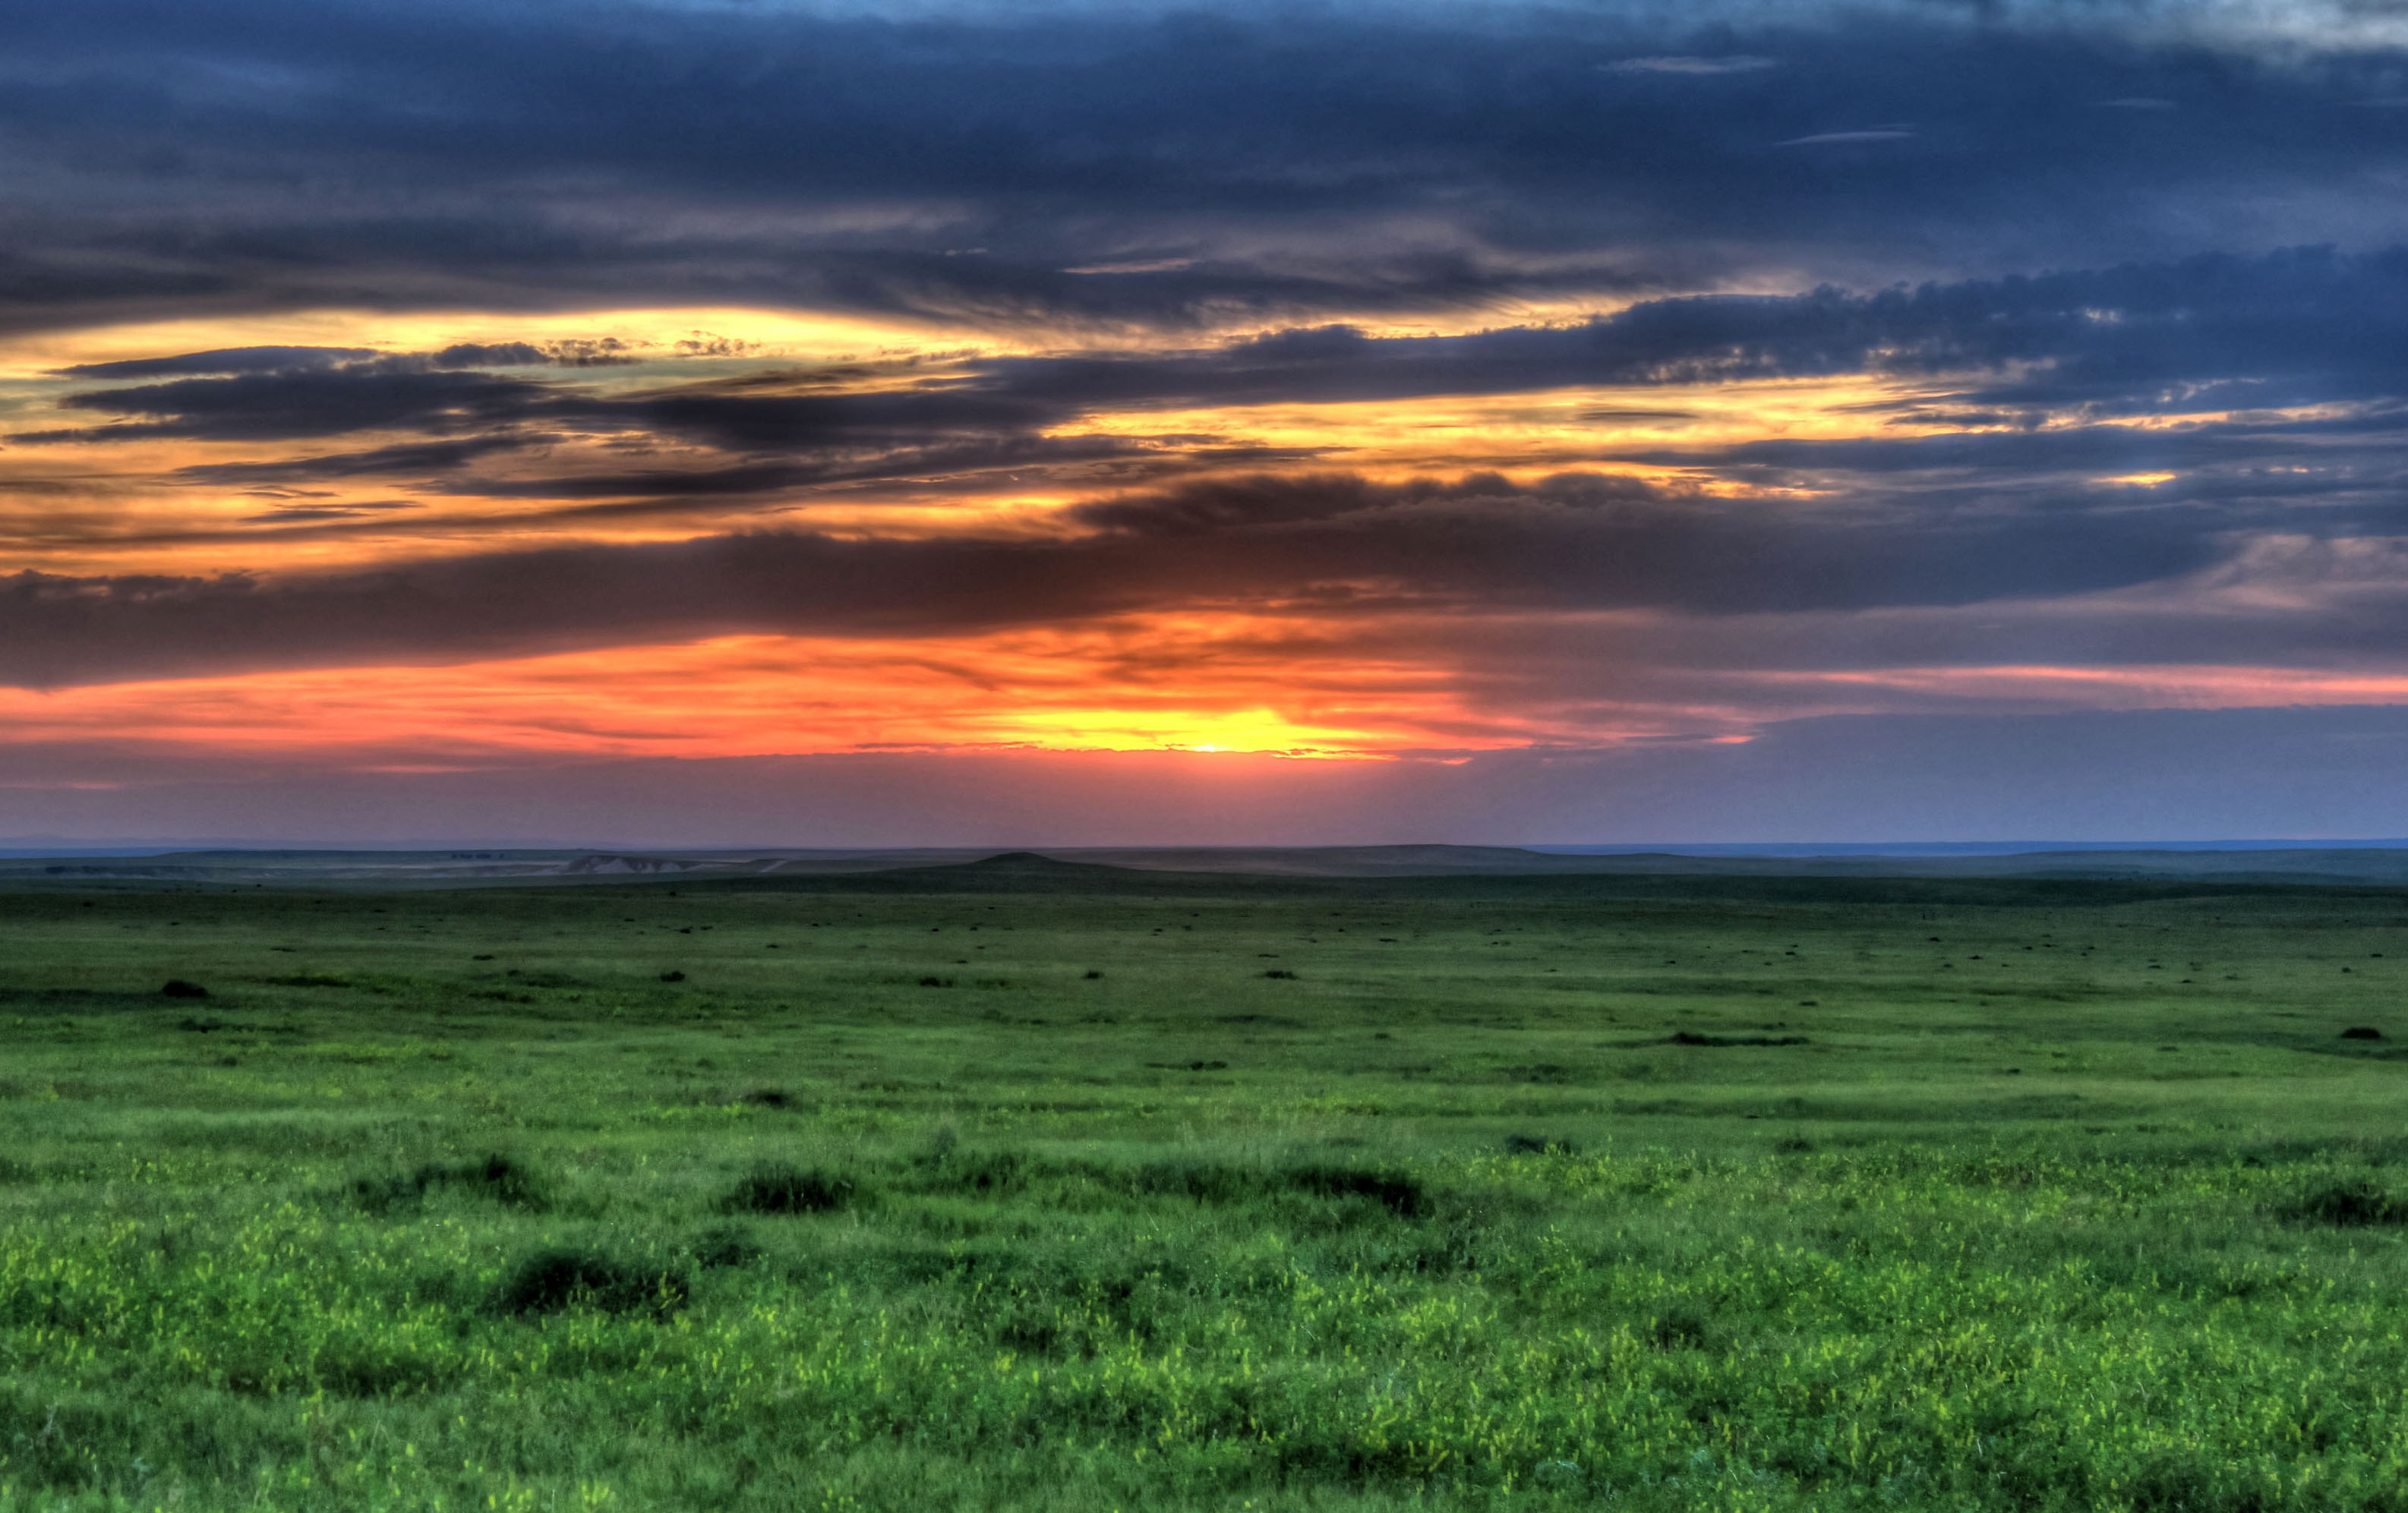 south-dakota-badlands-national-park-sunset-over-the-grassland (1